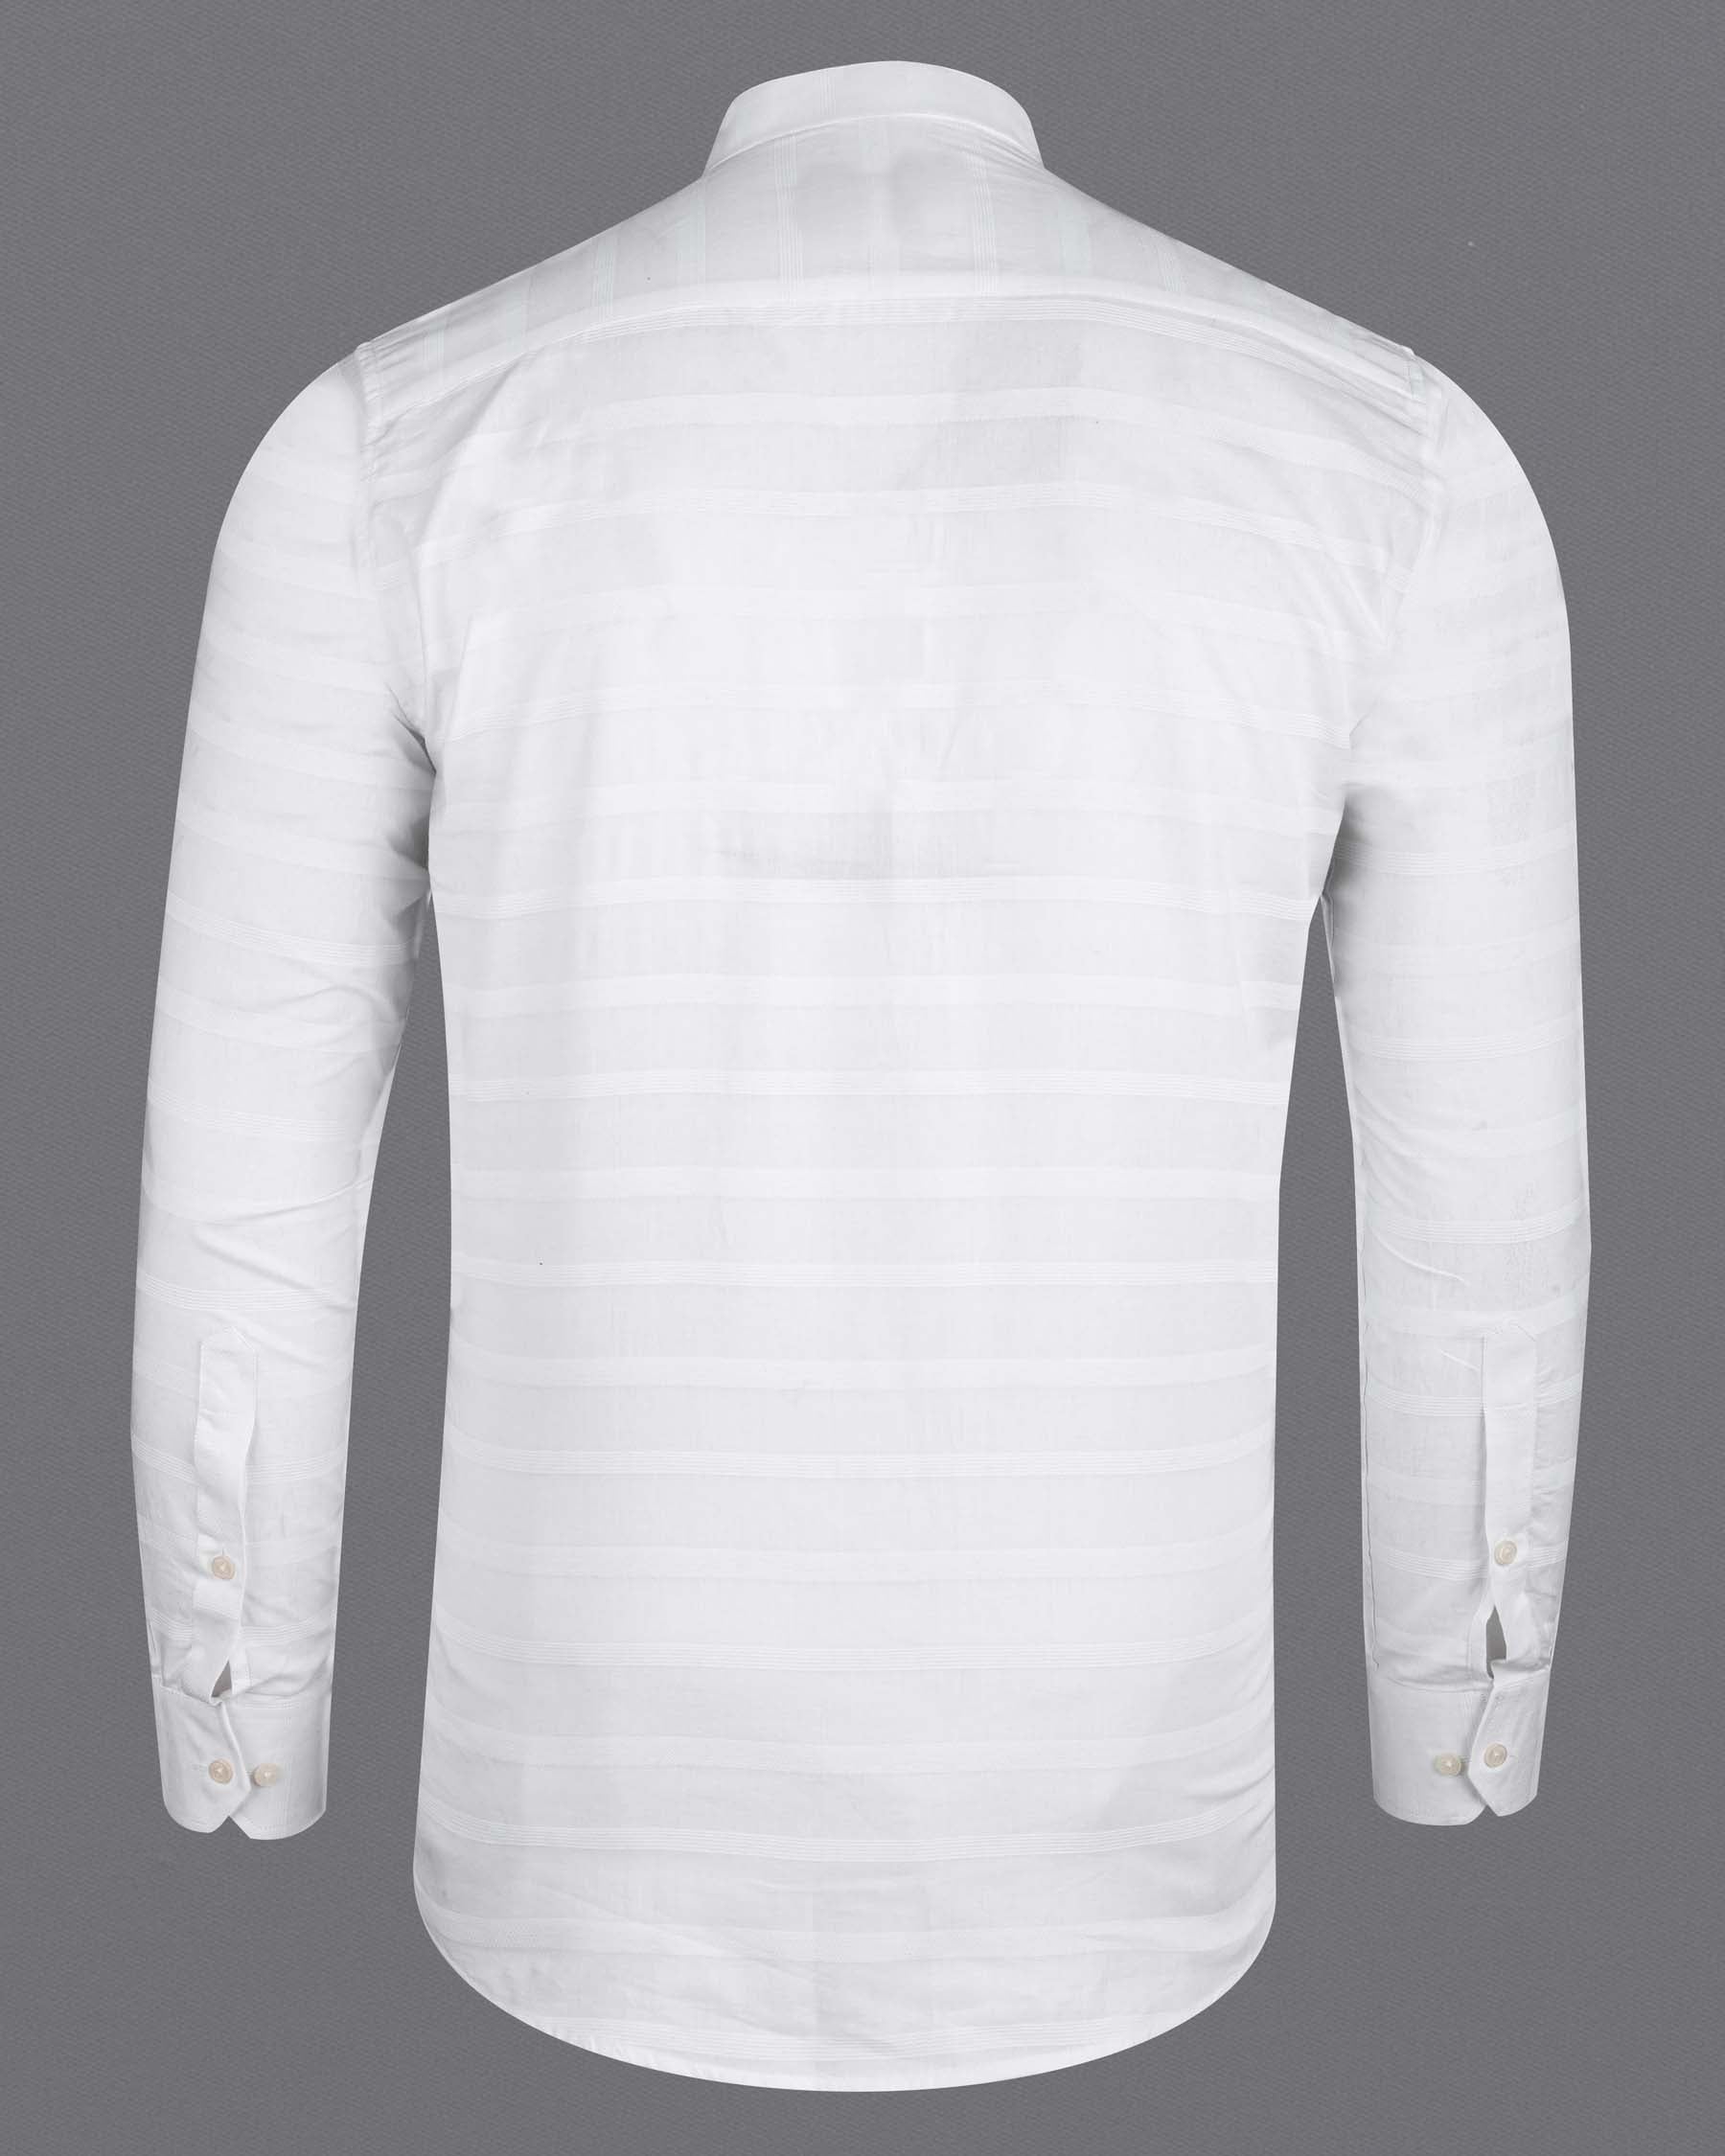 Bright White Striped Dobby Textured Premium Giza Cotton Shirt 6316-M-38, 6316-M-H-38, 6316-M-39, 6316-M-H-39, 6316-M-40, 6316-M-H-40, 6316-M-42, 6316-M-H-42, 6316-M-44, 6316-M-H-44, 6316-M-46, 6316-M-H-46, 6316-M-48, 6316-M-H-48, 6316-M-50, 6316-M-H-50, 6316-M-52, 6316-M-H-52